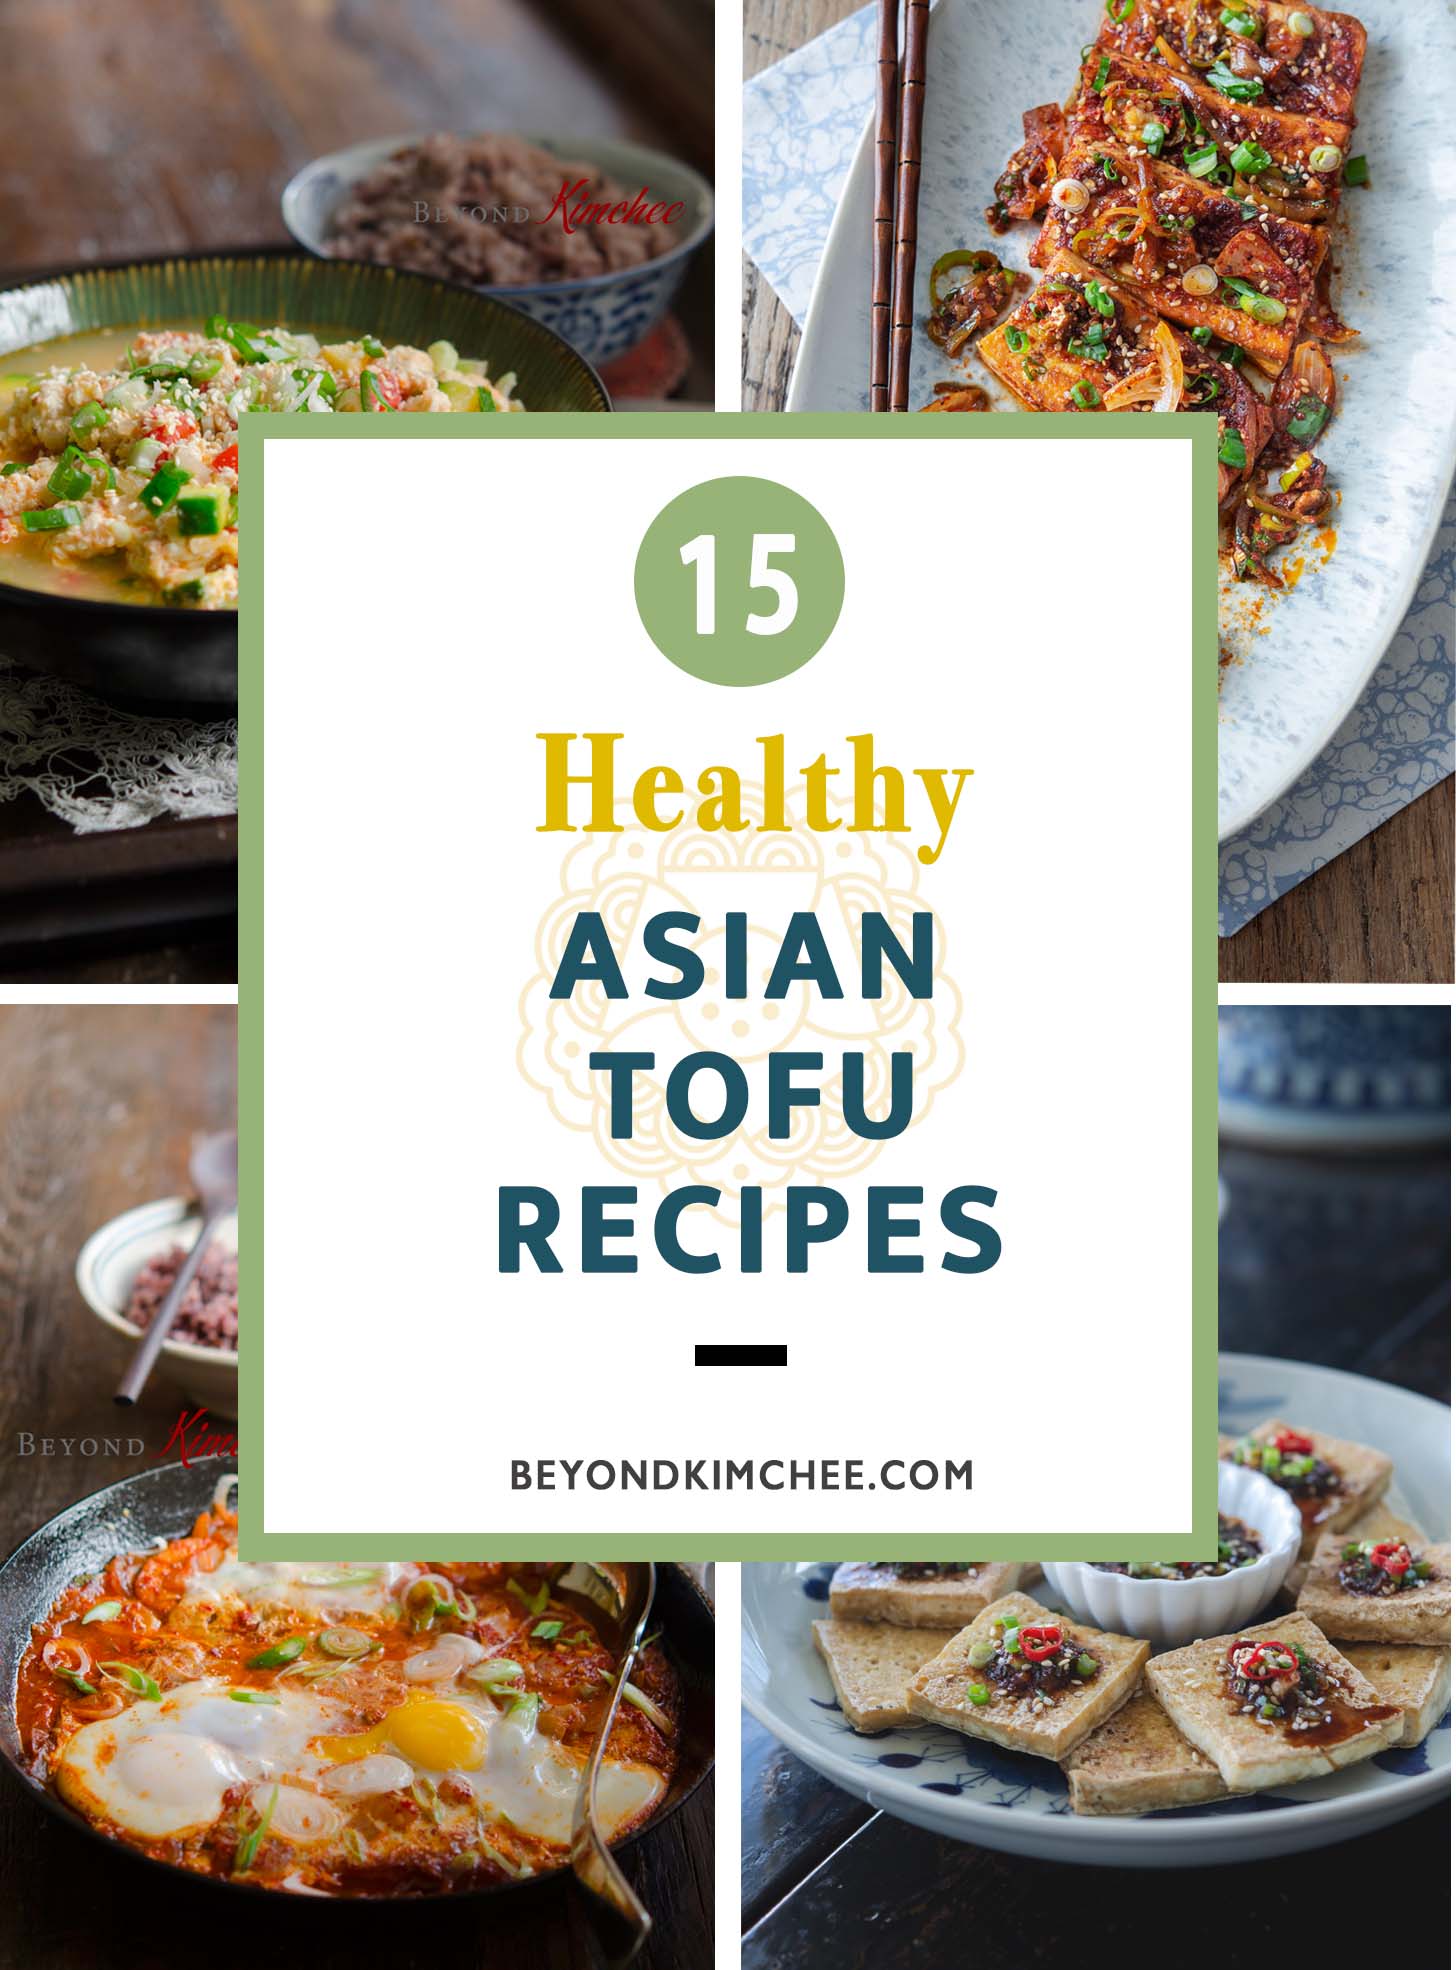 Recipe roundup for healthy Asian tofu recipes